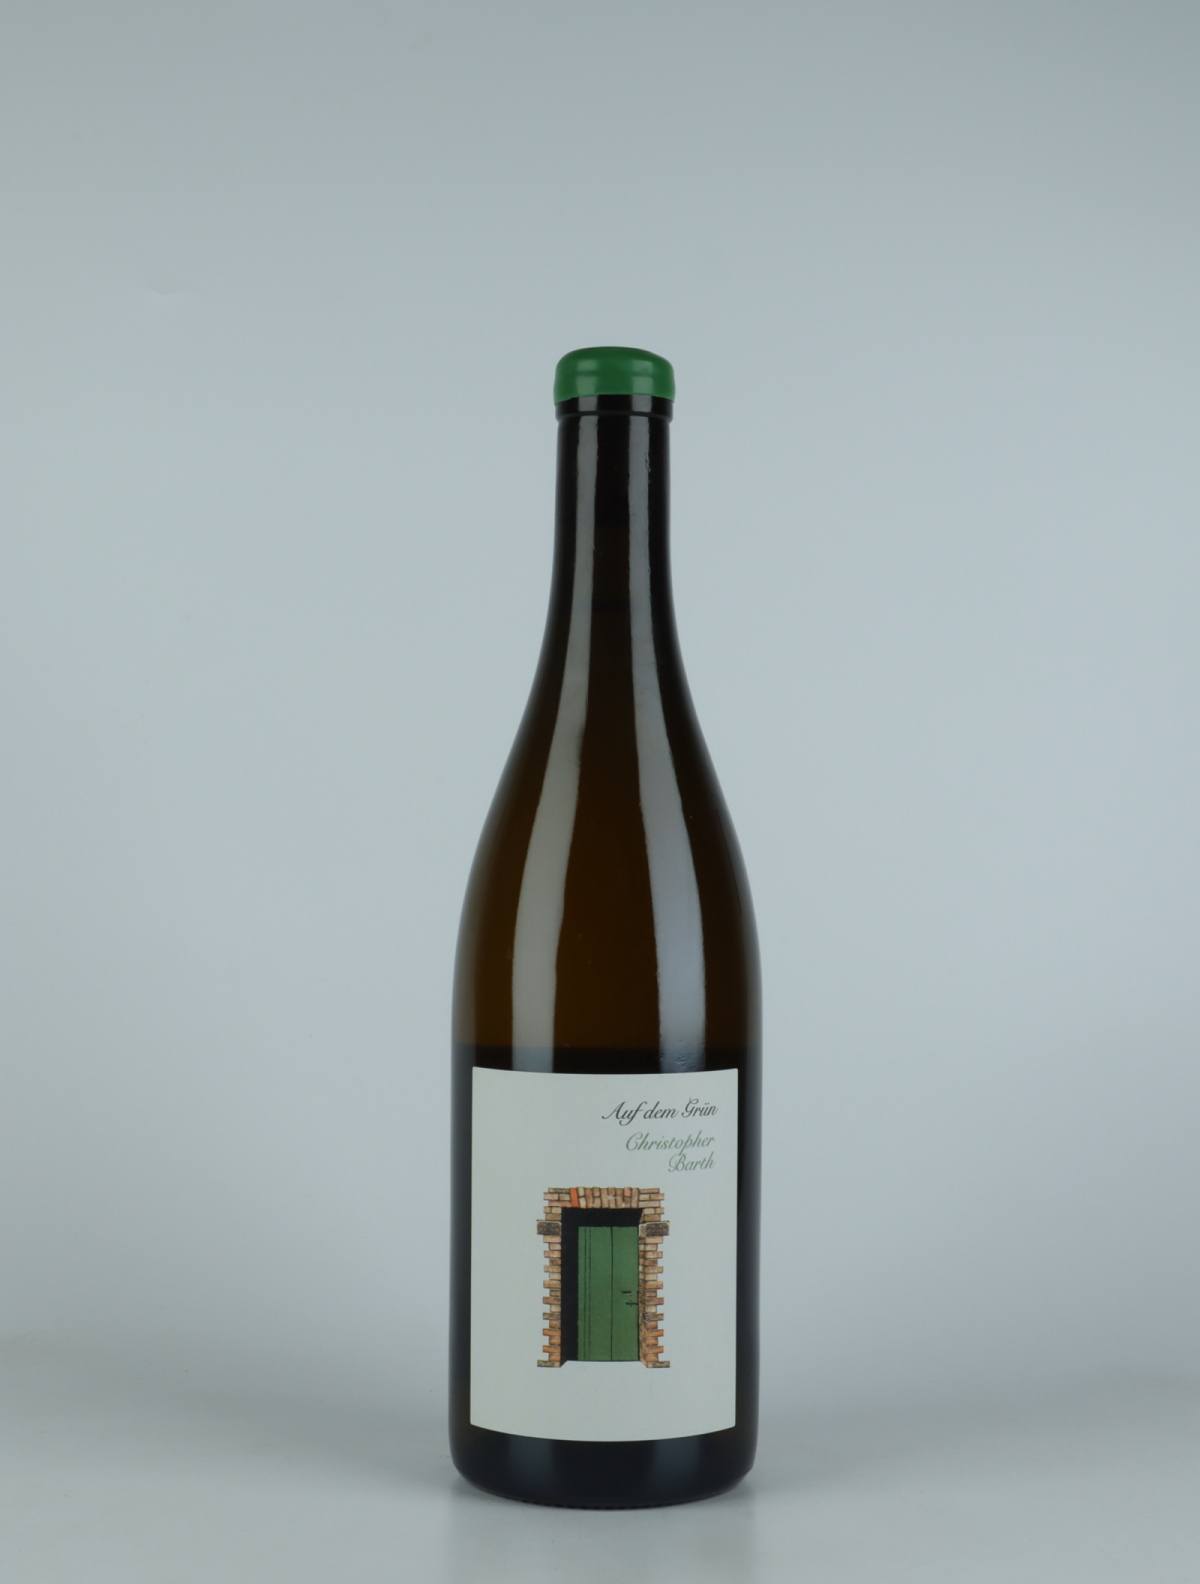 En flaske 2019 Auf dem Grün Riesling Hvidvin fra Christopher Barth, Rheinhessen i Tyskland